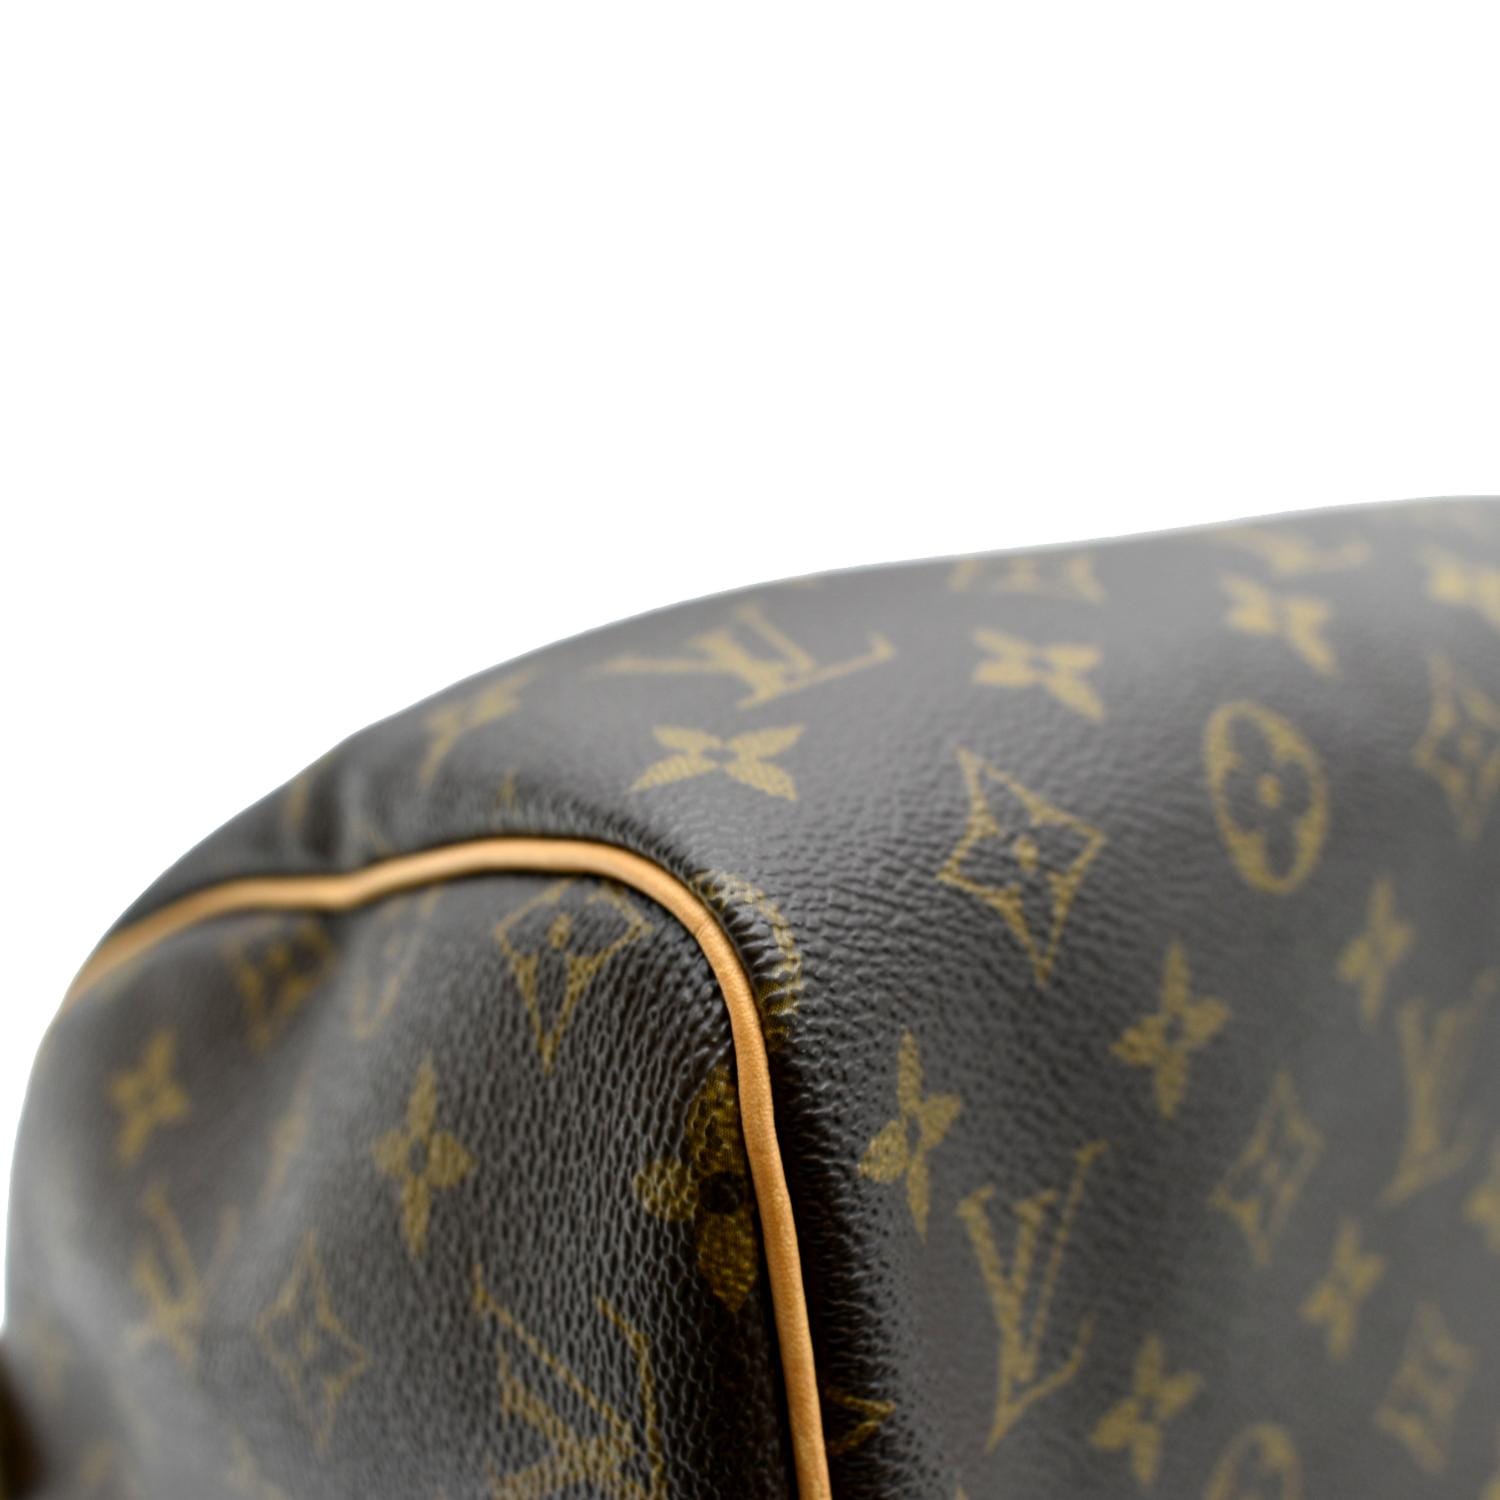 Speedy leather handbag Louis Vuitton Brown in Leather - 36560808